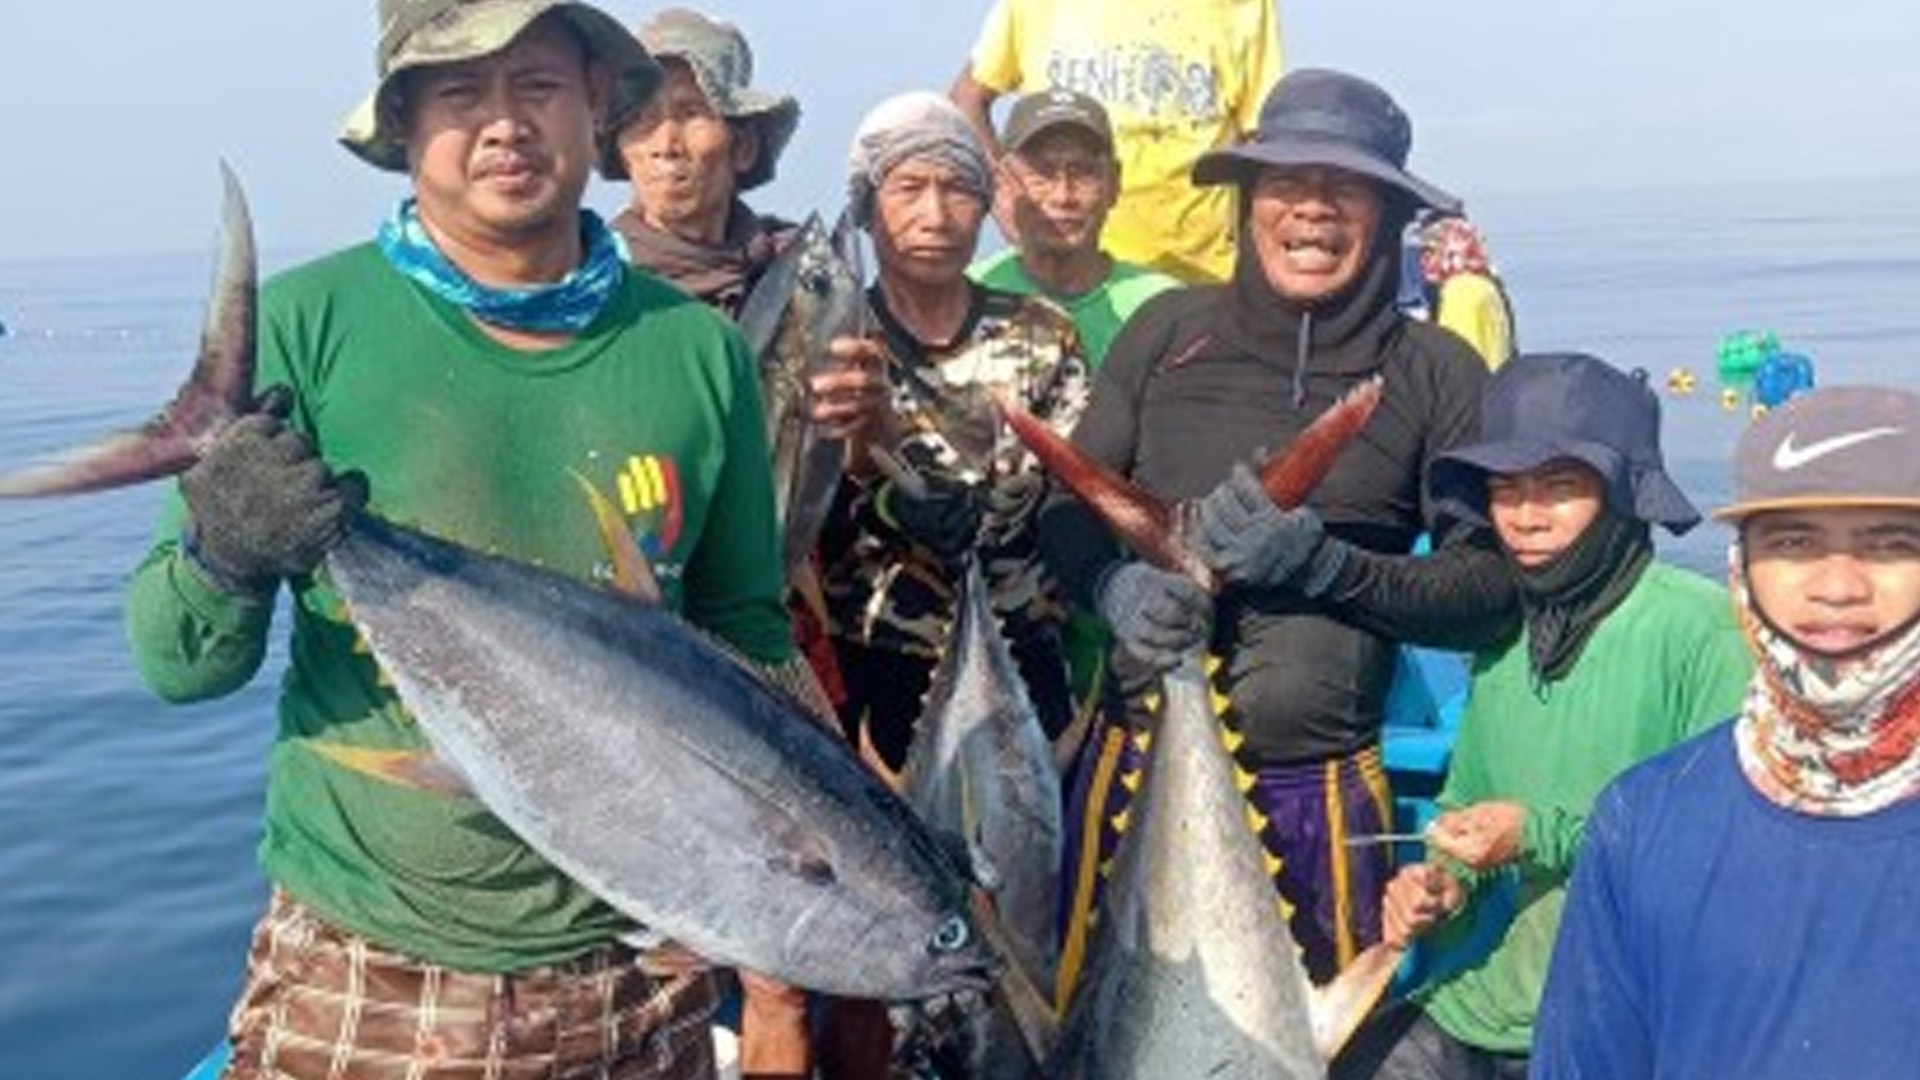 BFAR-Initiated Fishing Tech Boosts Livelihood Of Ilocos Fisherfolk - PAGEONE